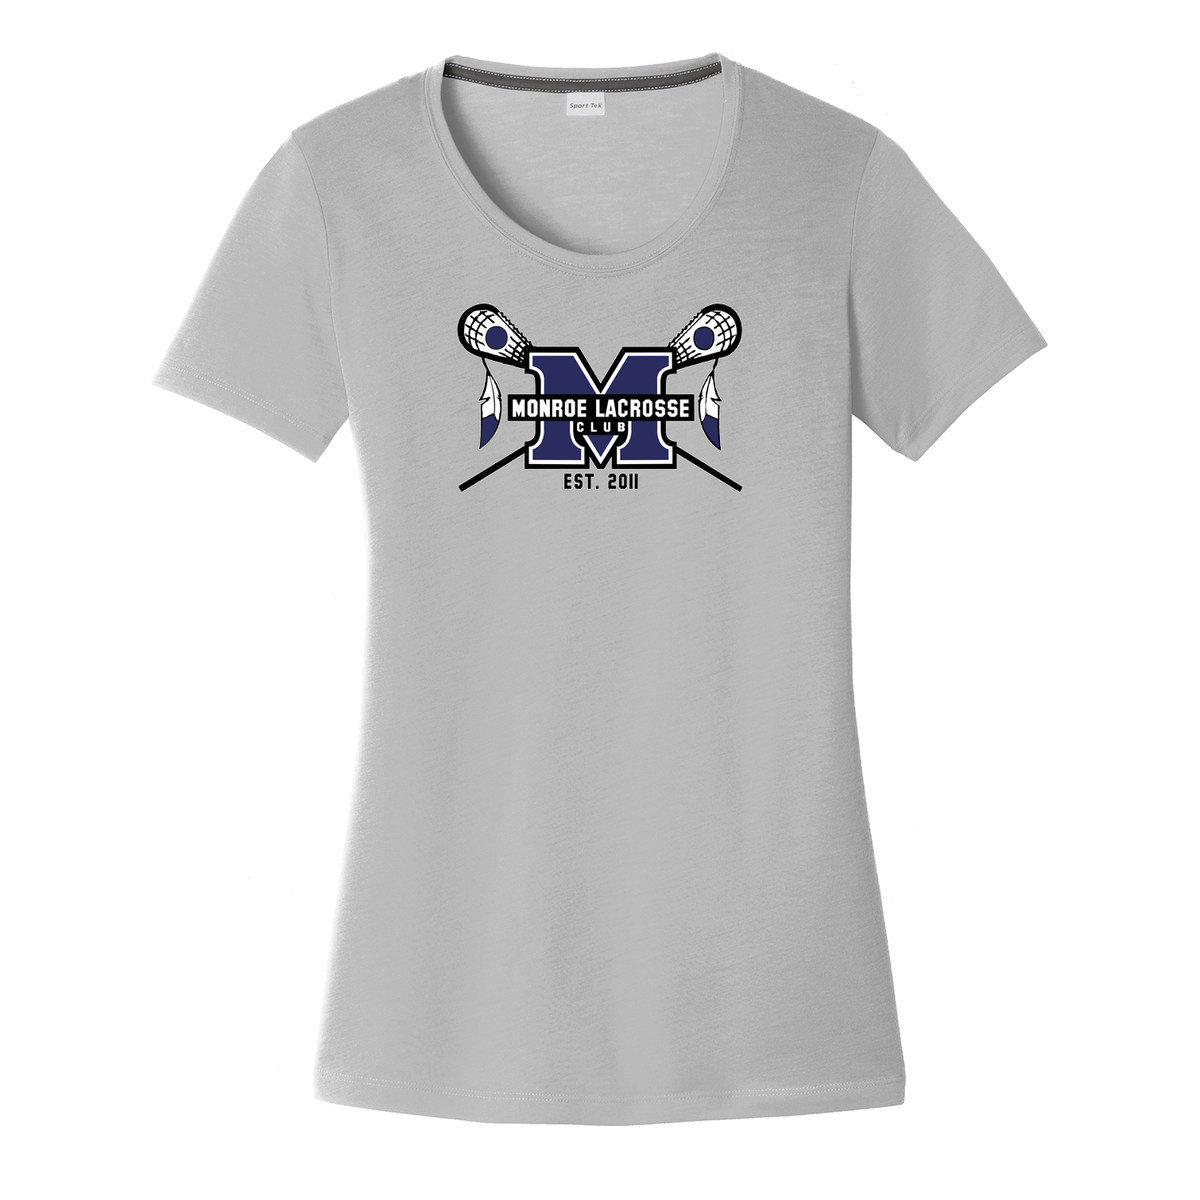 Monroe Braves Women's CottonTouch Performance T-Shirt